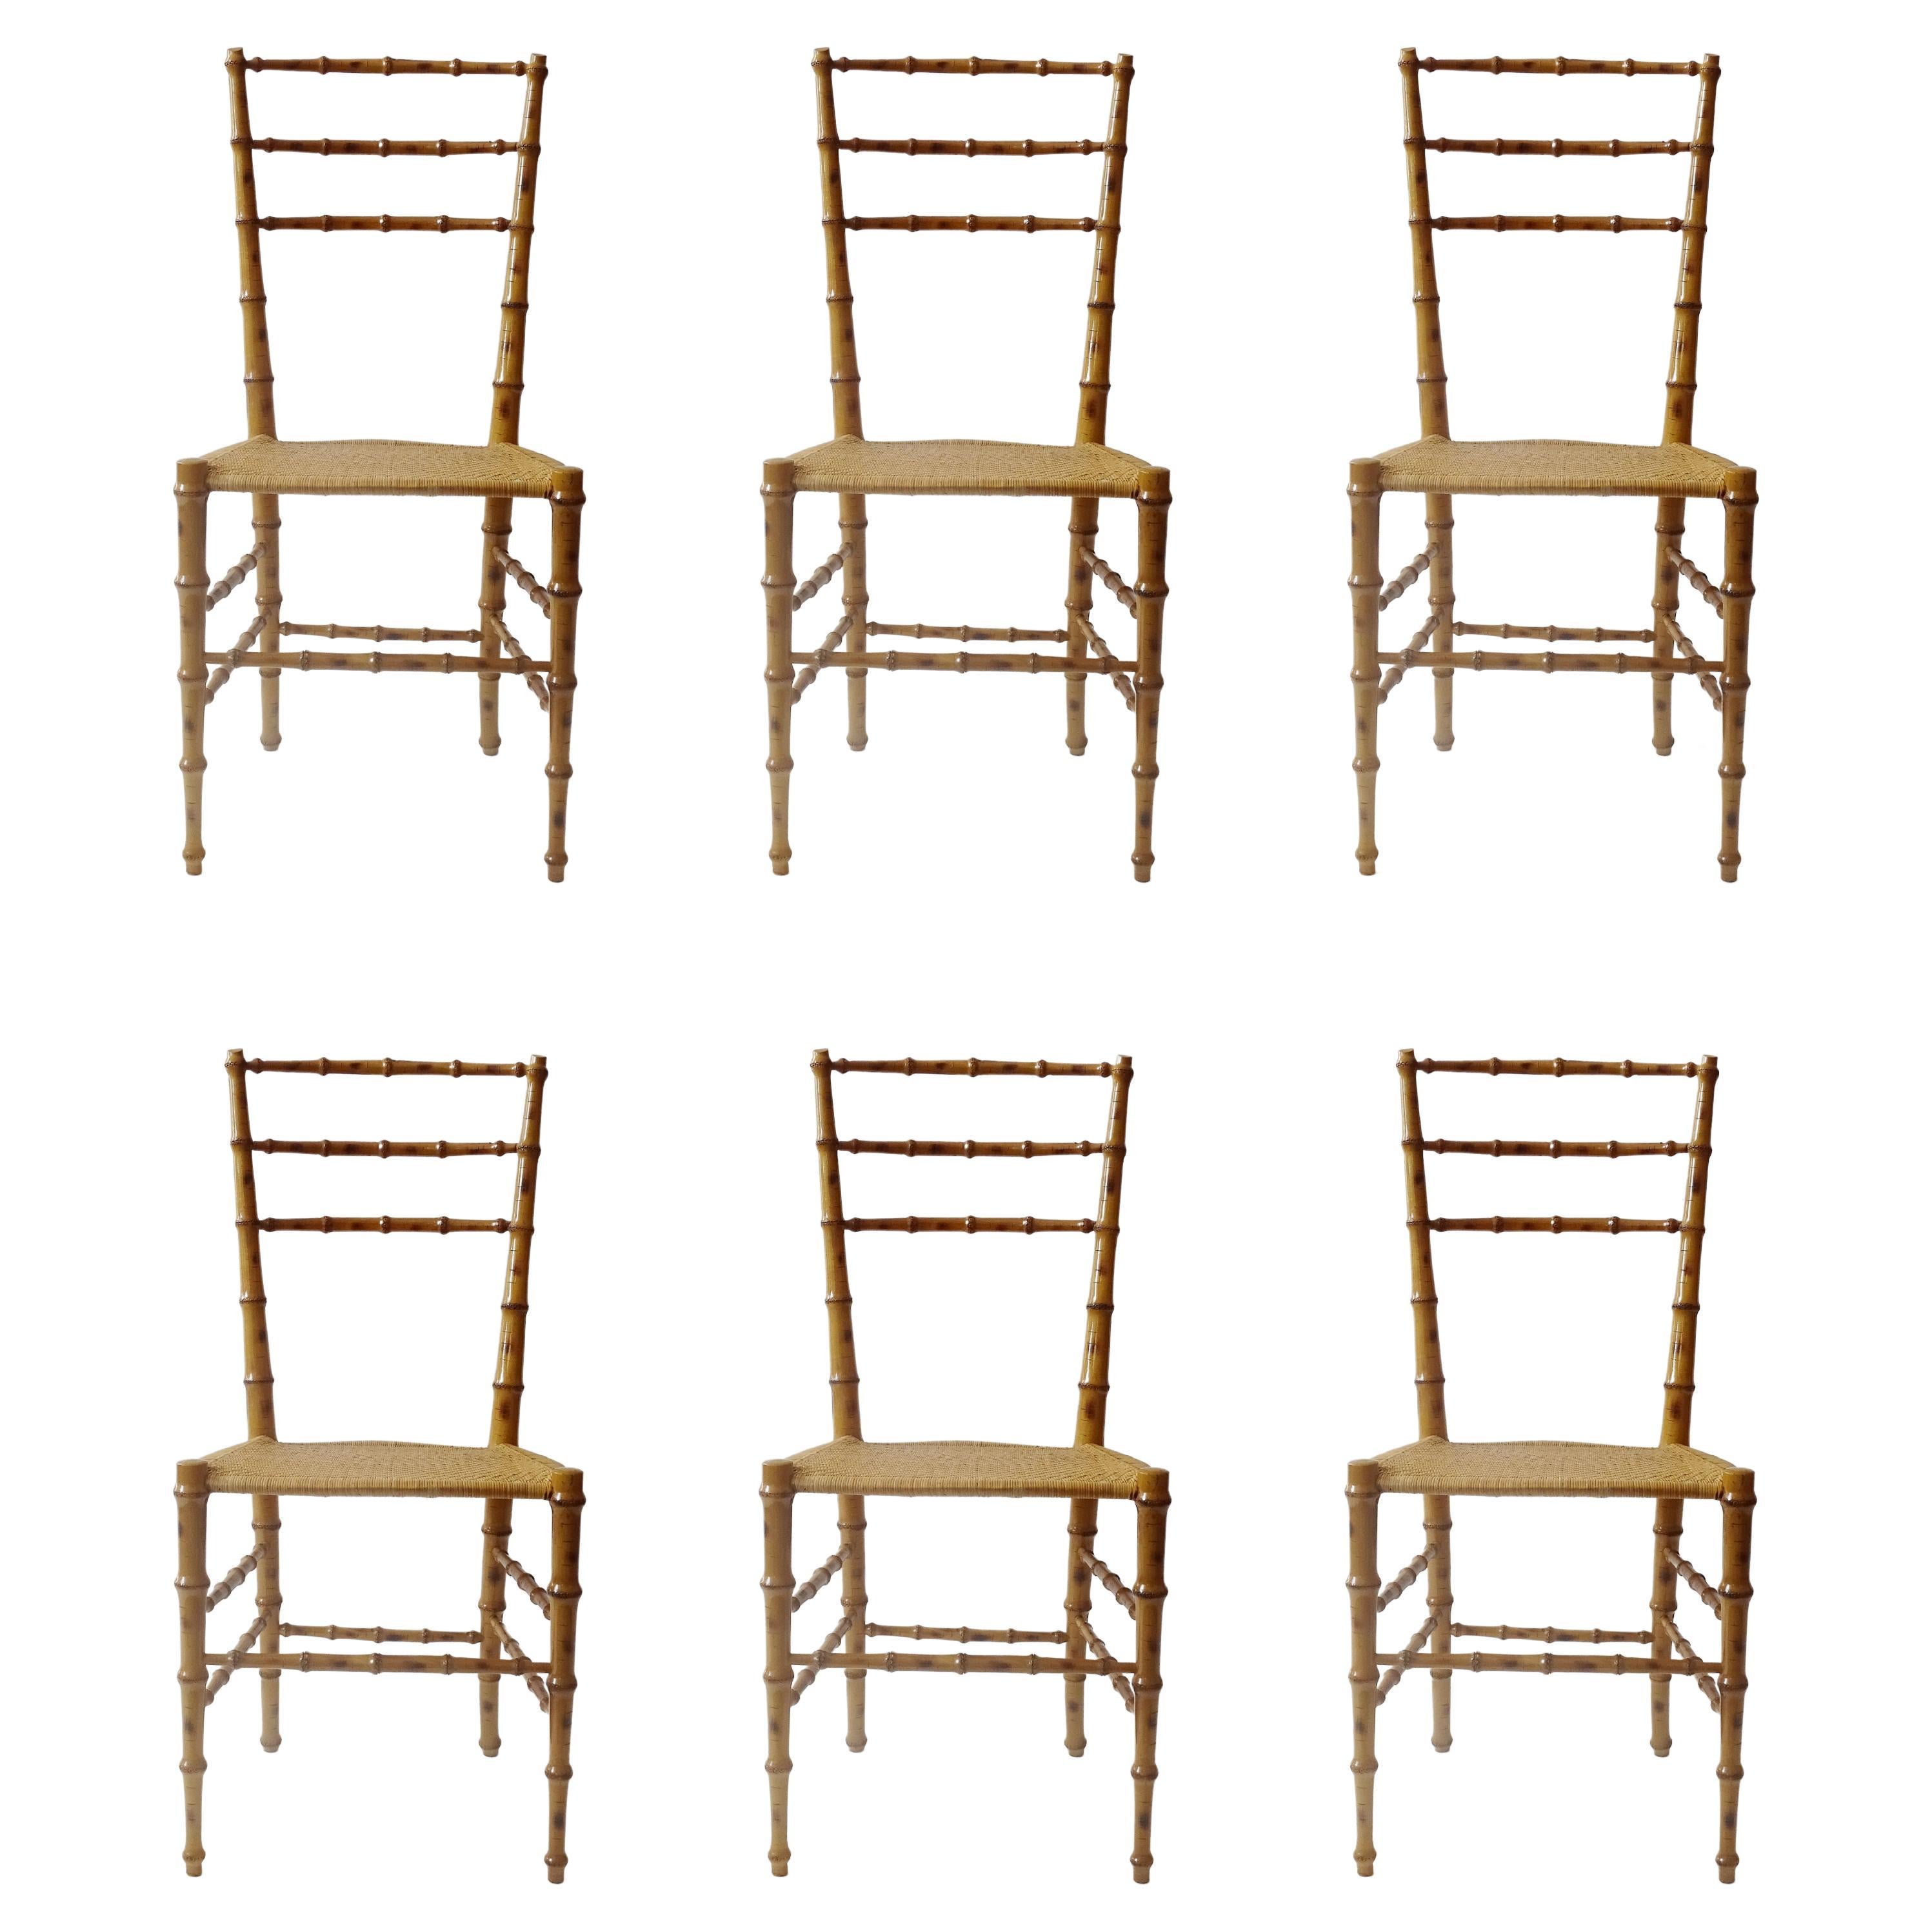 Splendid set of Six Faux Bamboo Chiavarina Chairs, Italy 1950s